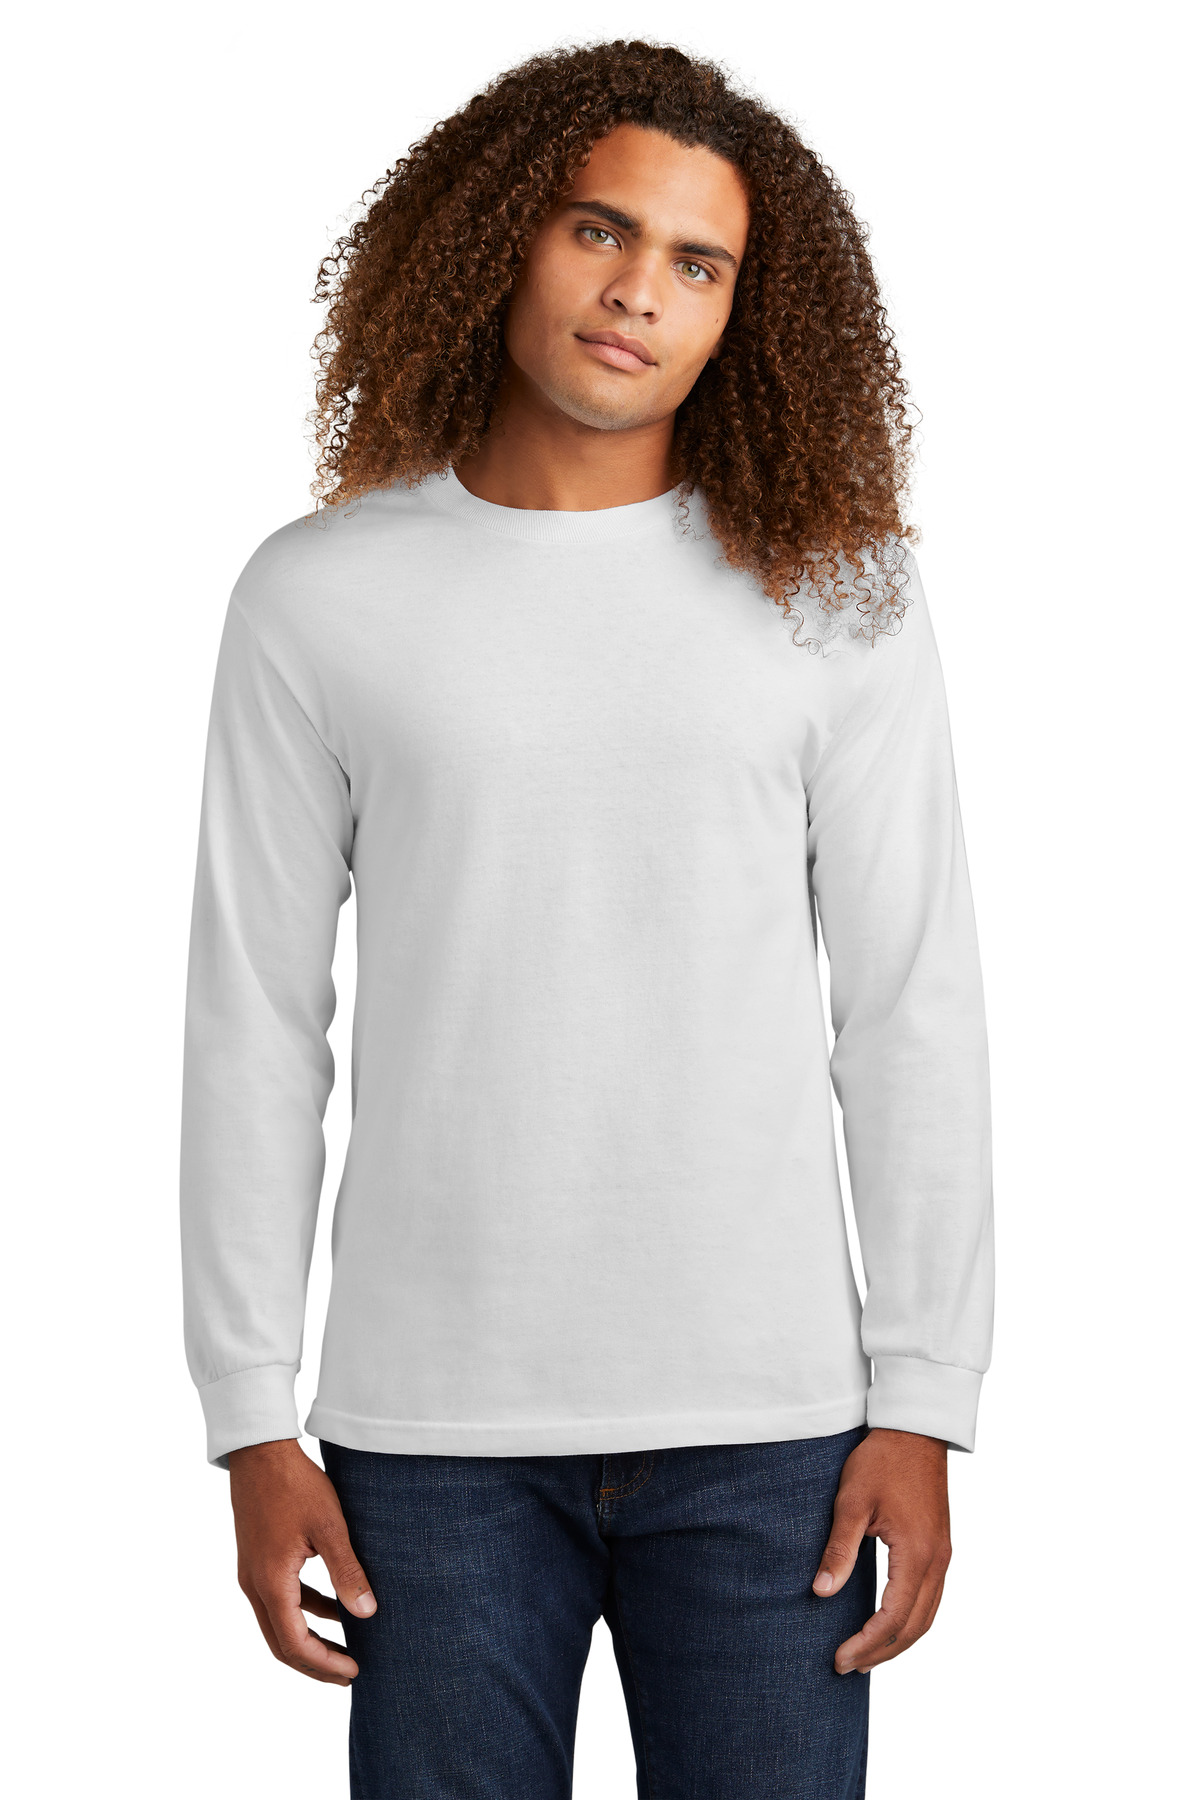 American Apparel Heavyweight Unisex Long Sleeve T-Shirt-